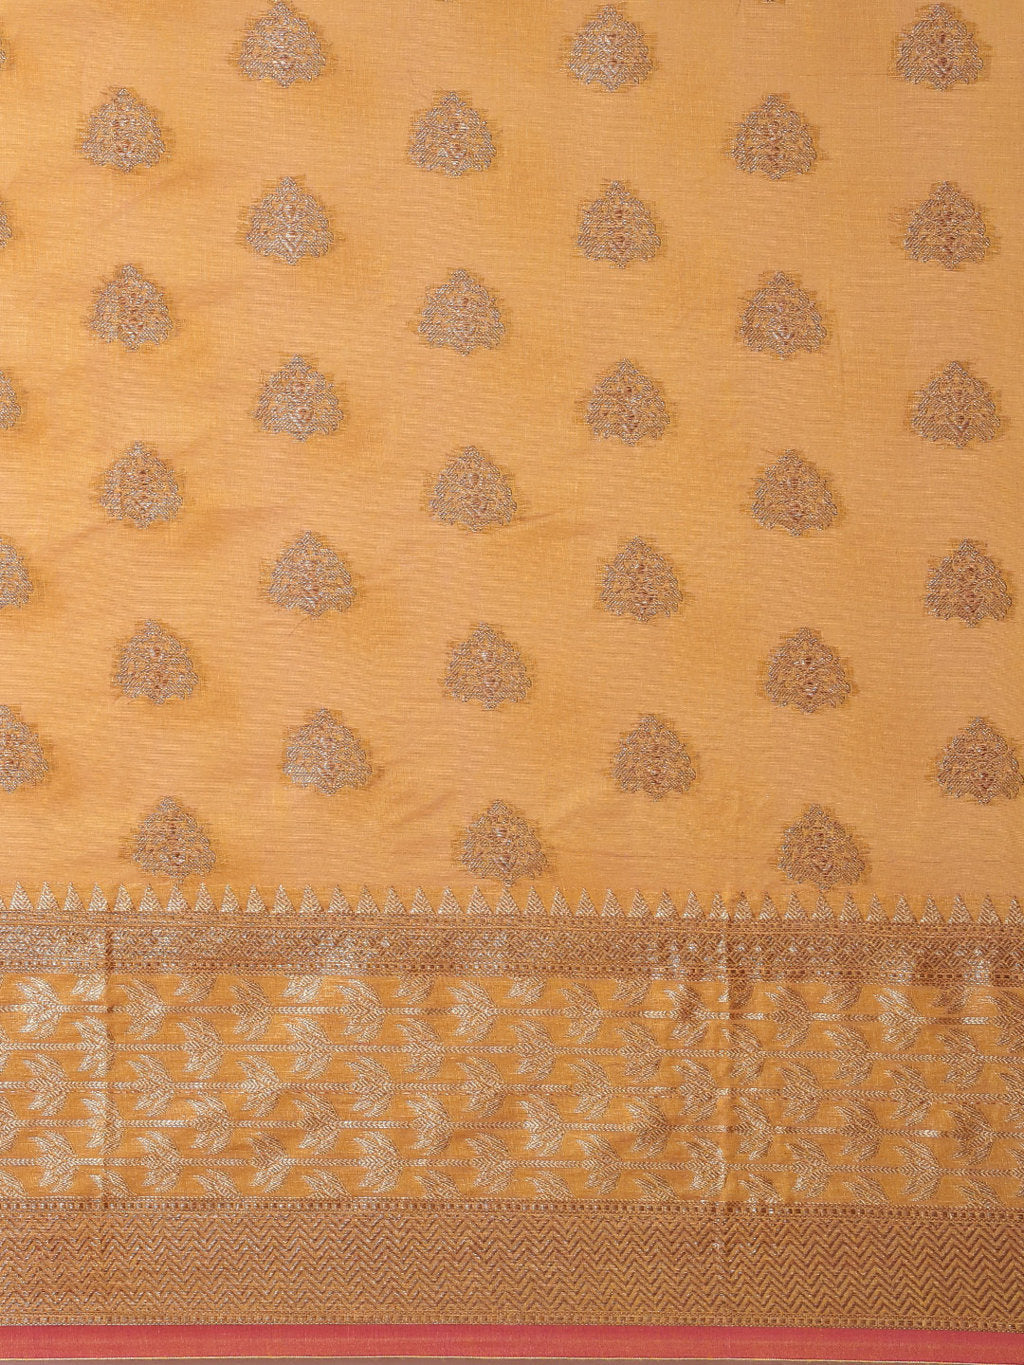 Women's Black Cotton Handloom Woven Work Traditional Saree - Sangam Prints